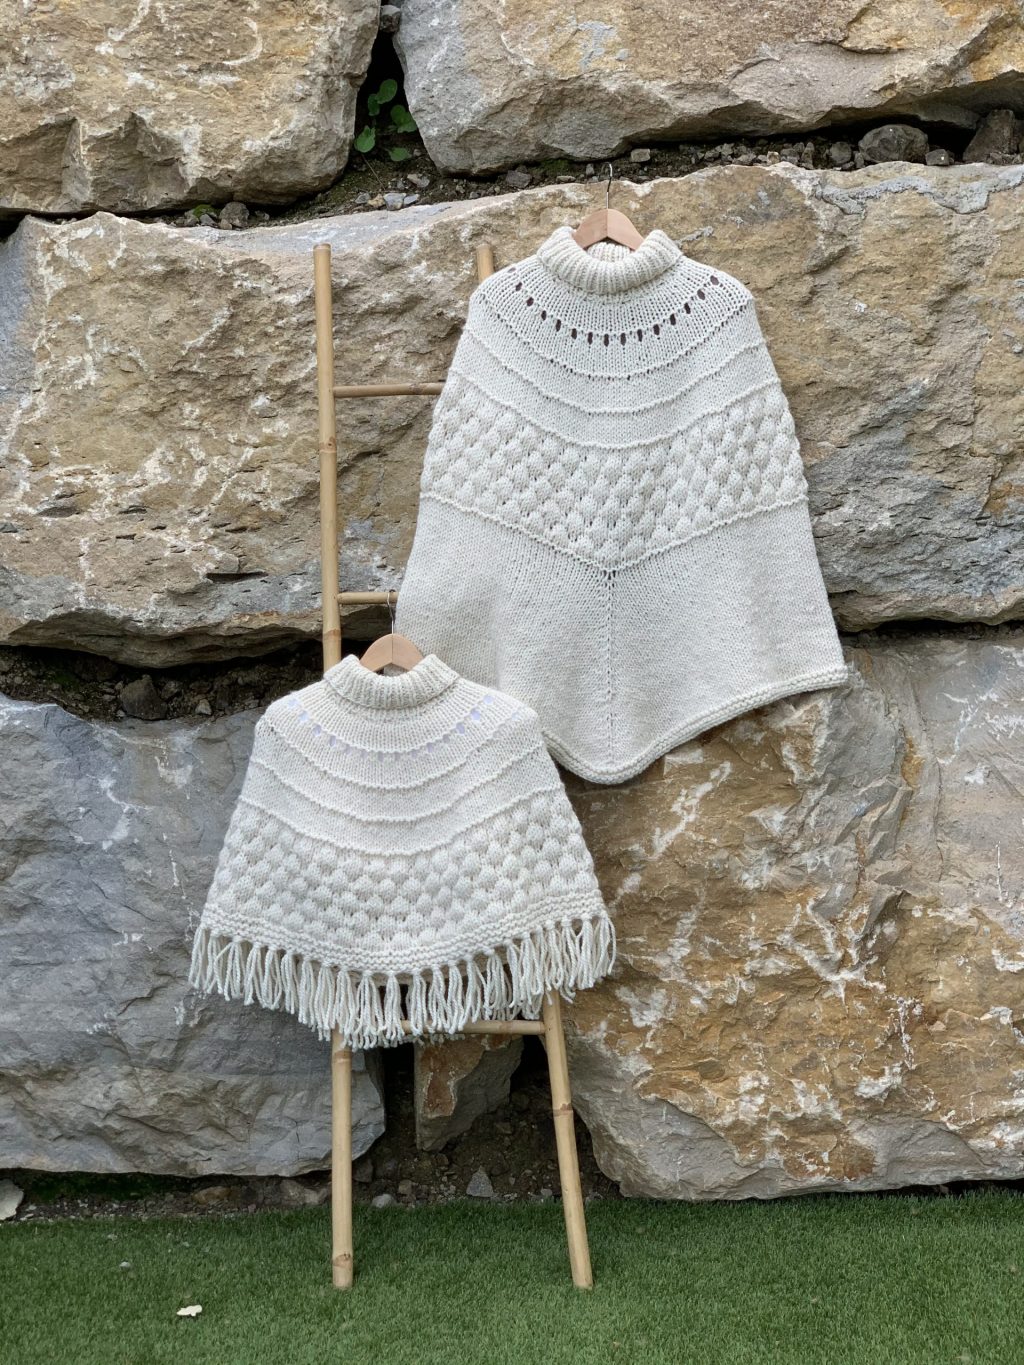 Fjäll poncho knitting pattern from fiber on repeat